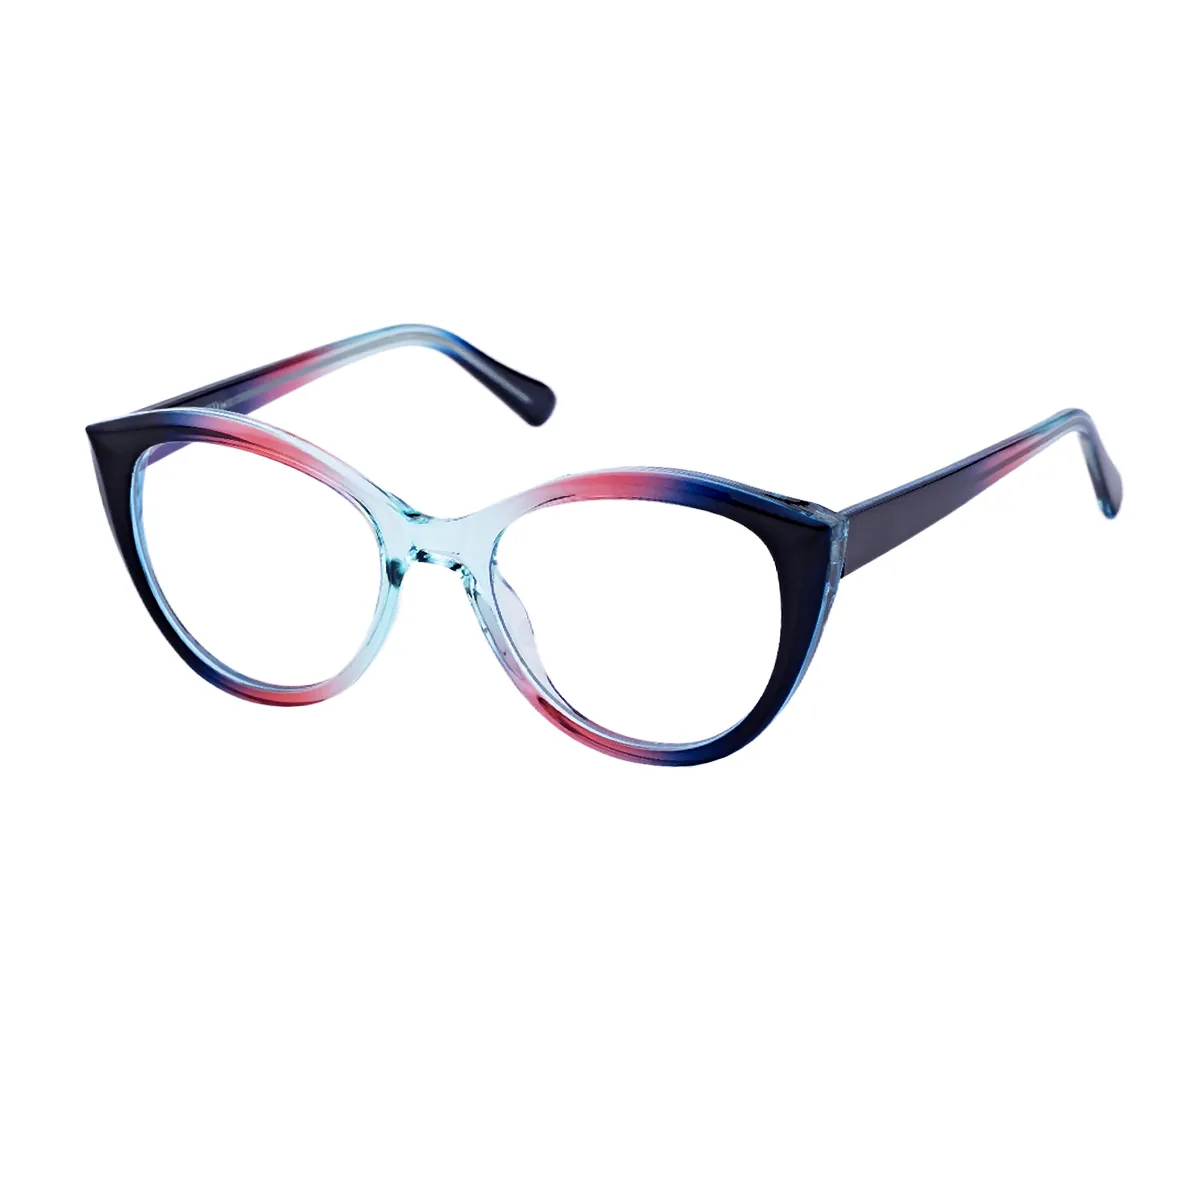 Fashion Cat-eye Blue/Pink Glasses for Women